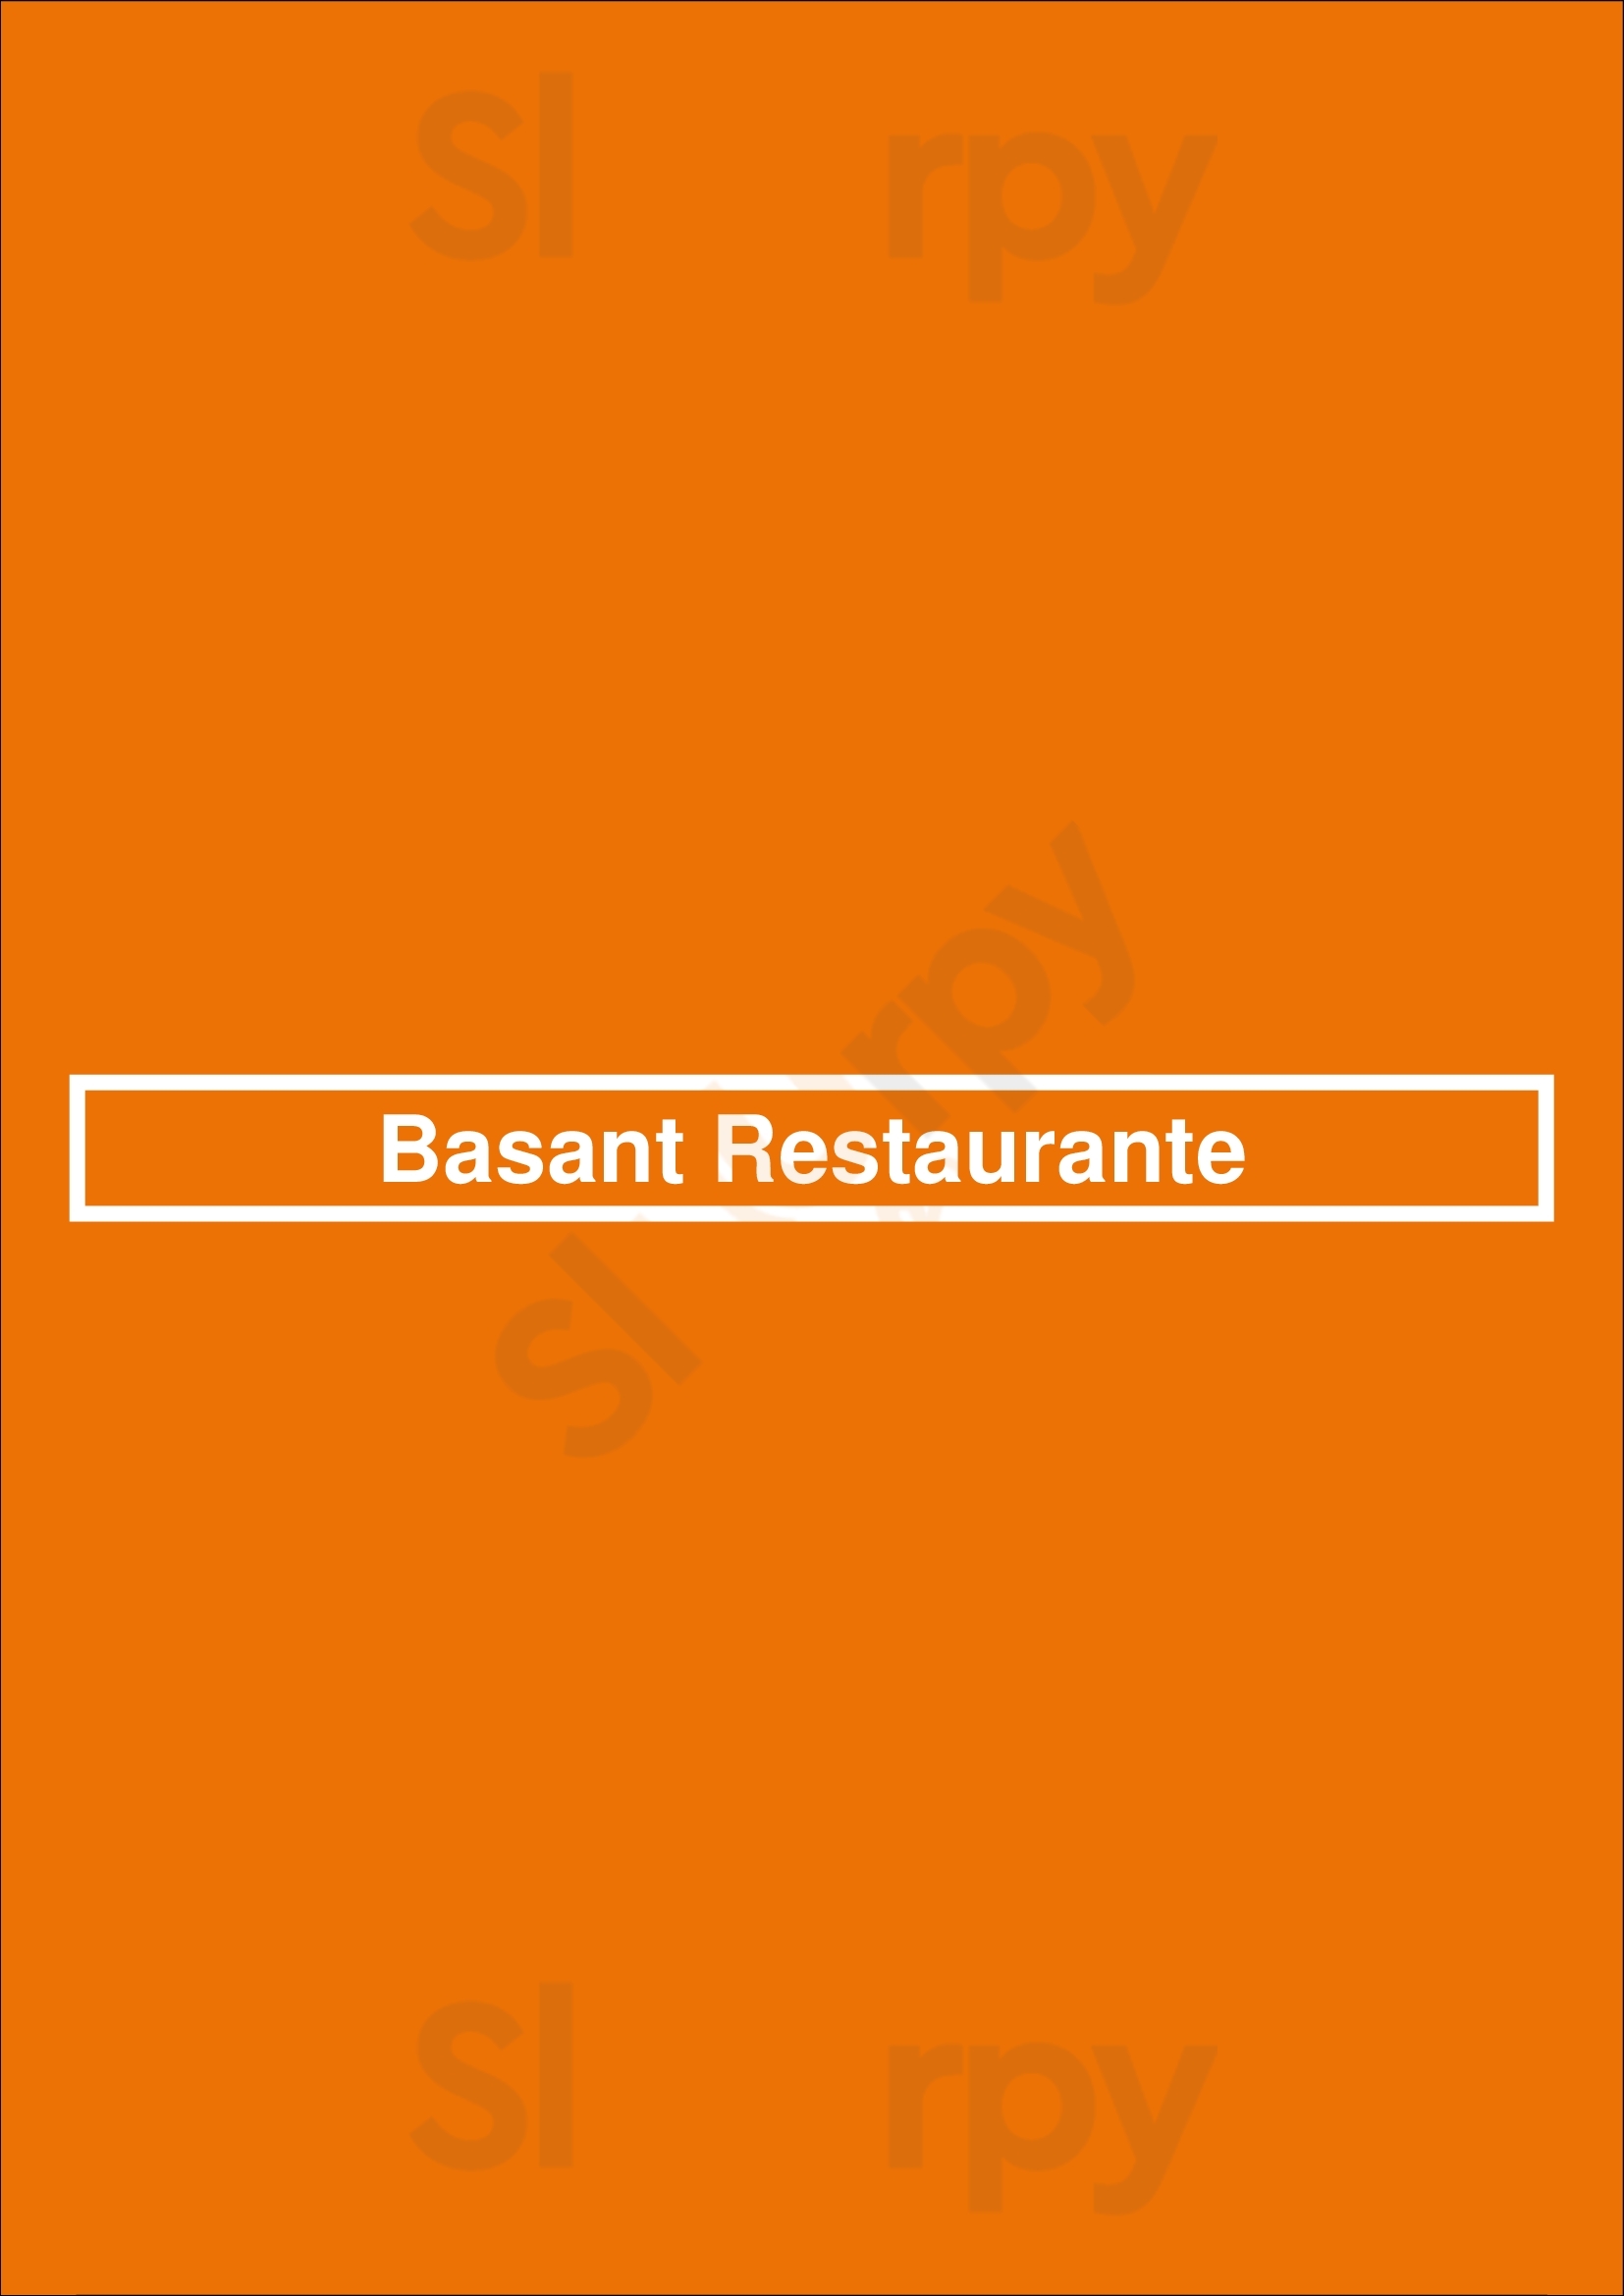 Basant Restaurante Getafe Menu - 1